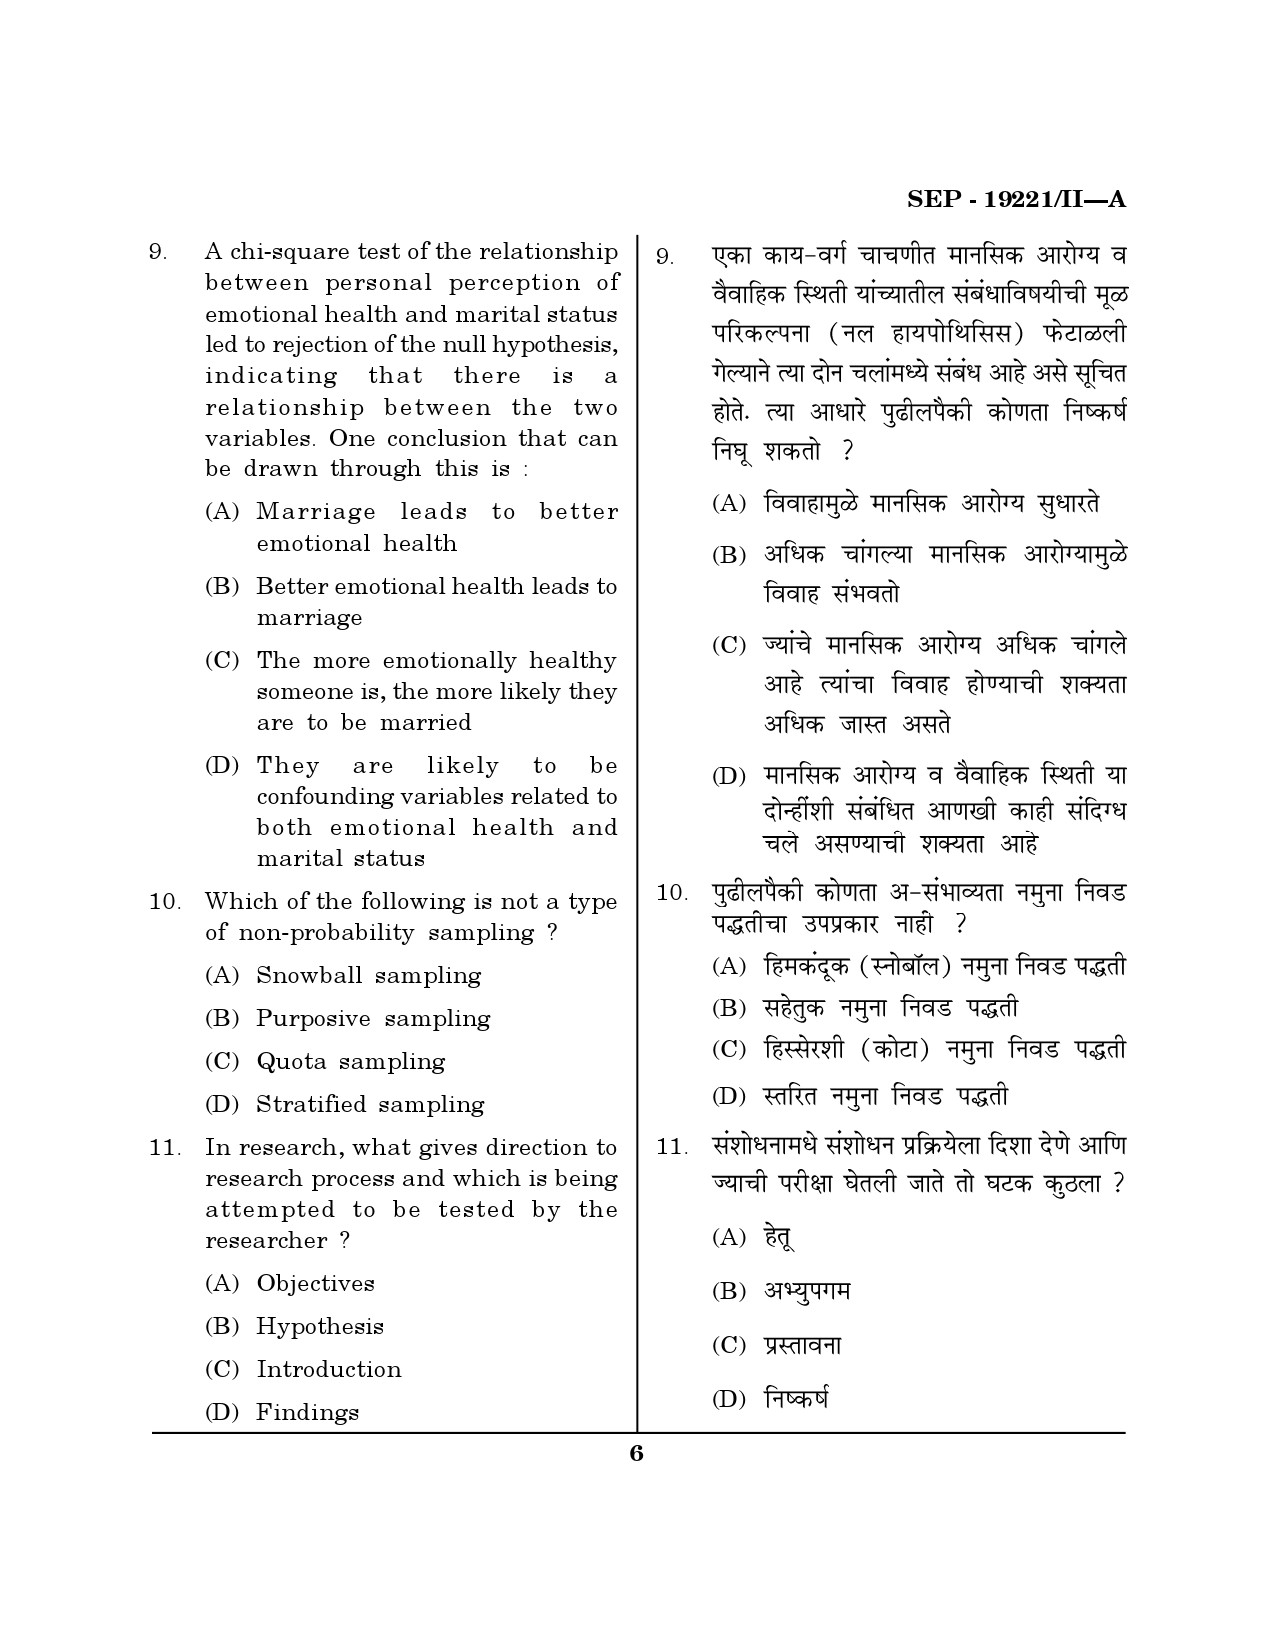 Maharashtra SET Journalism and Mass Communication Exam Question Paper September 2021 5